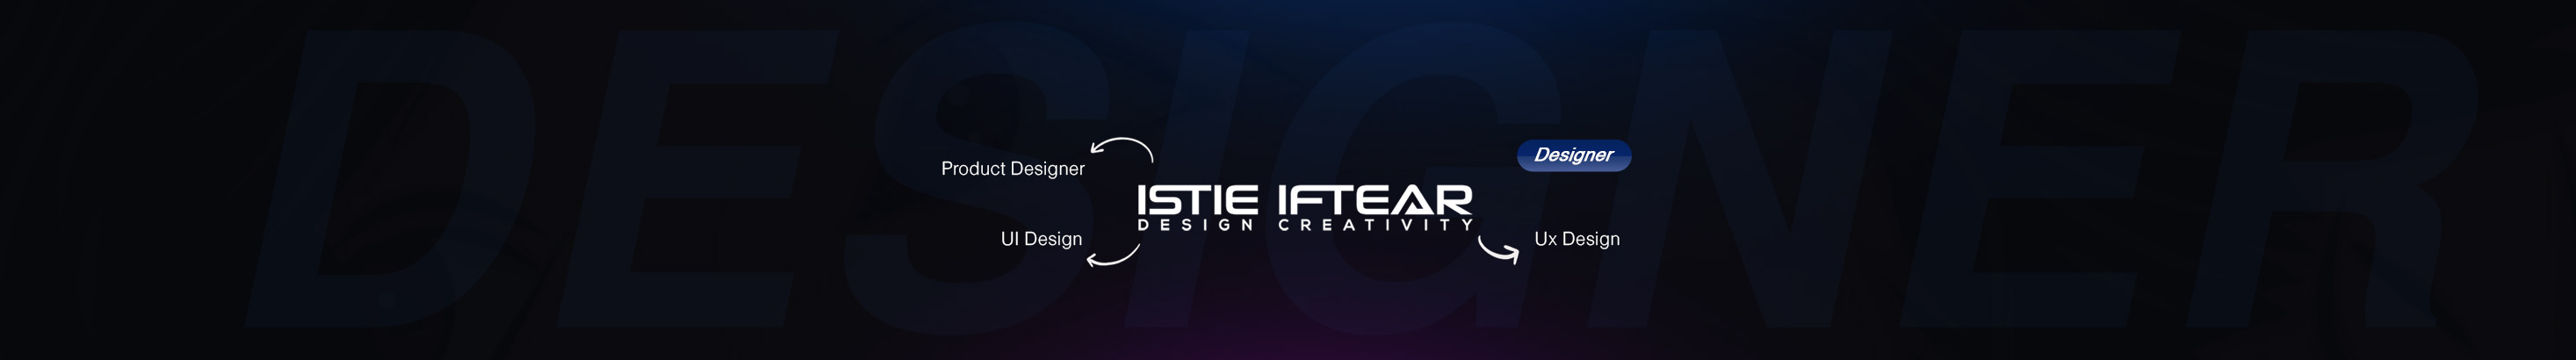 Istie Iftear's profile banner